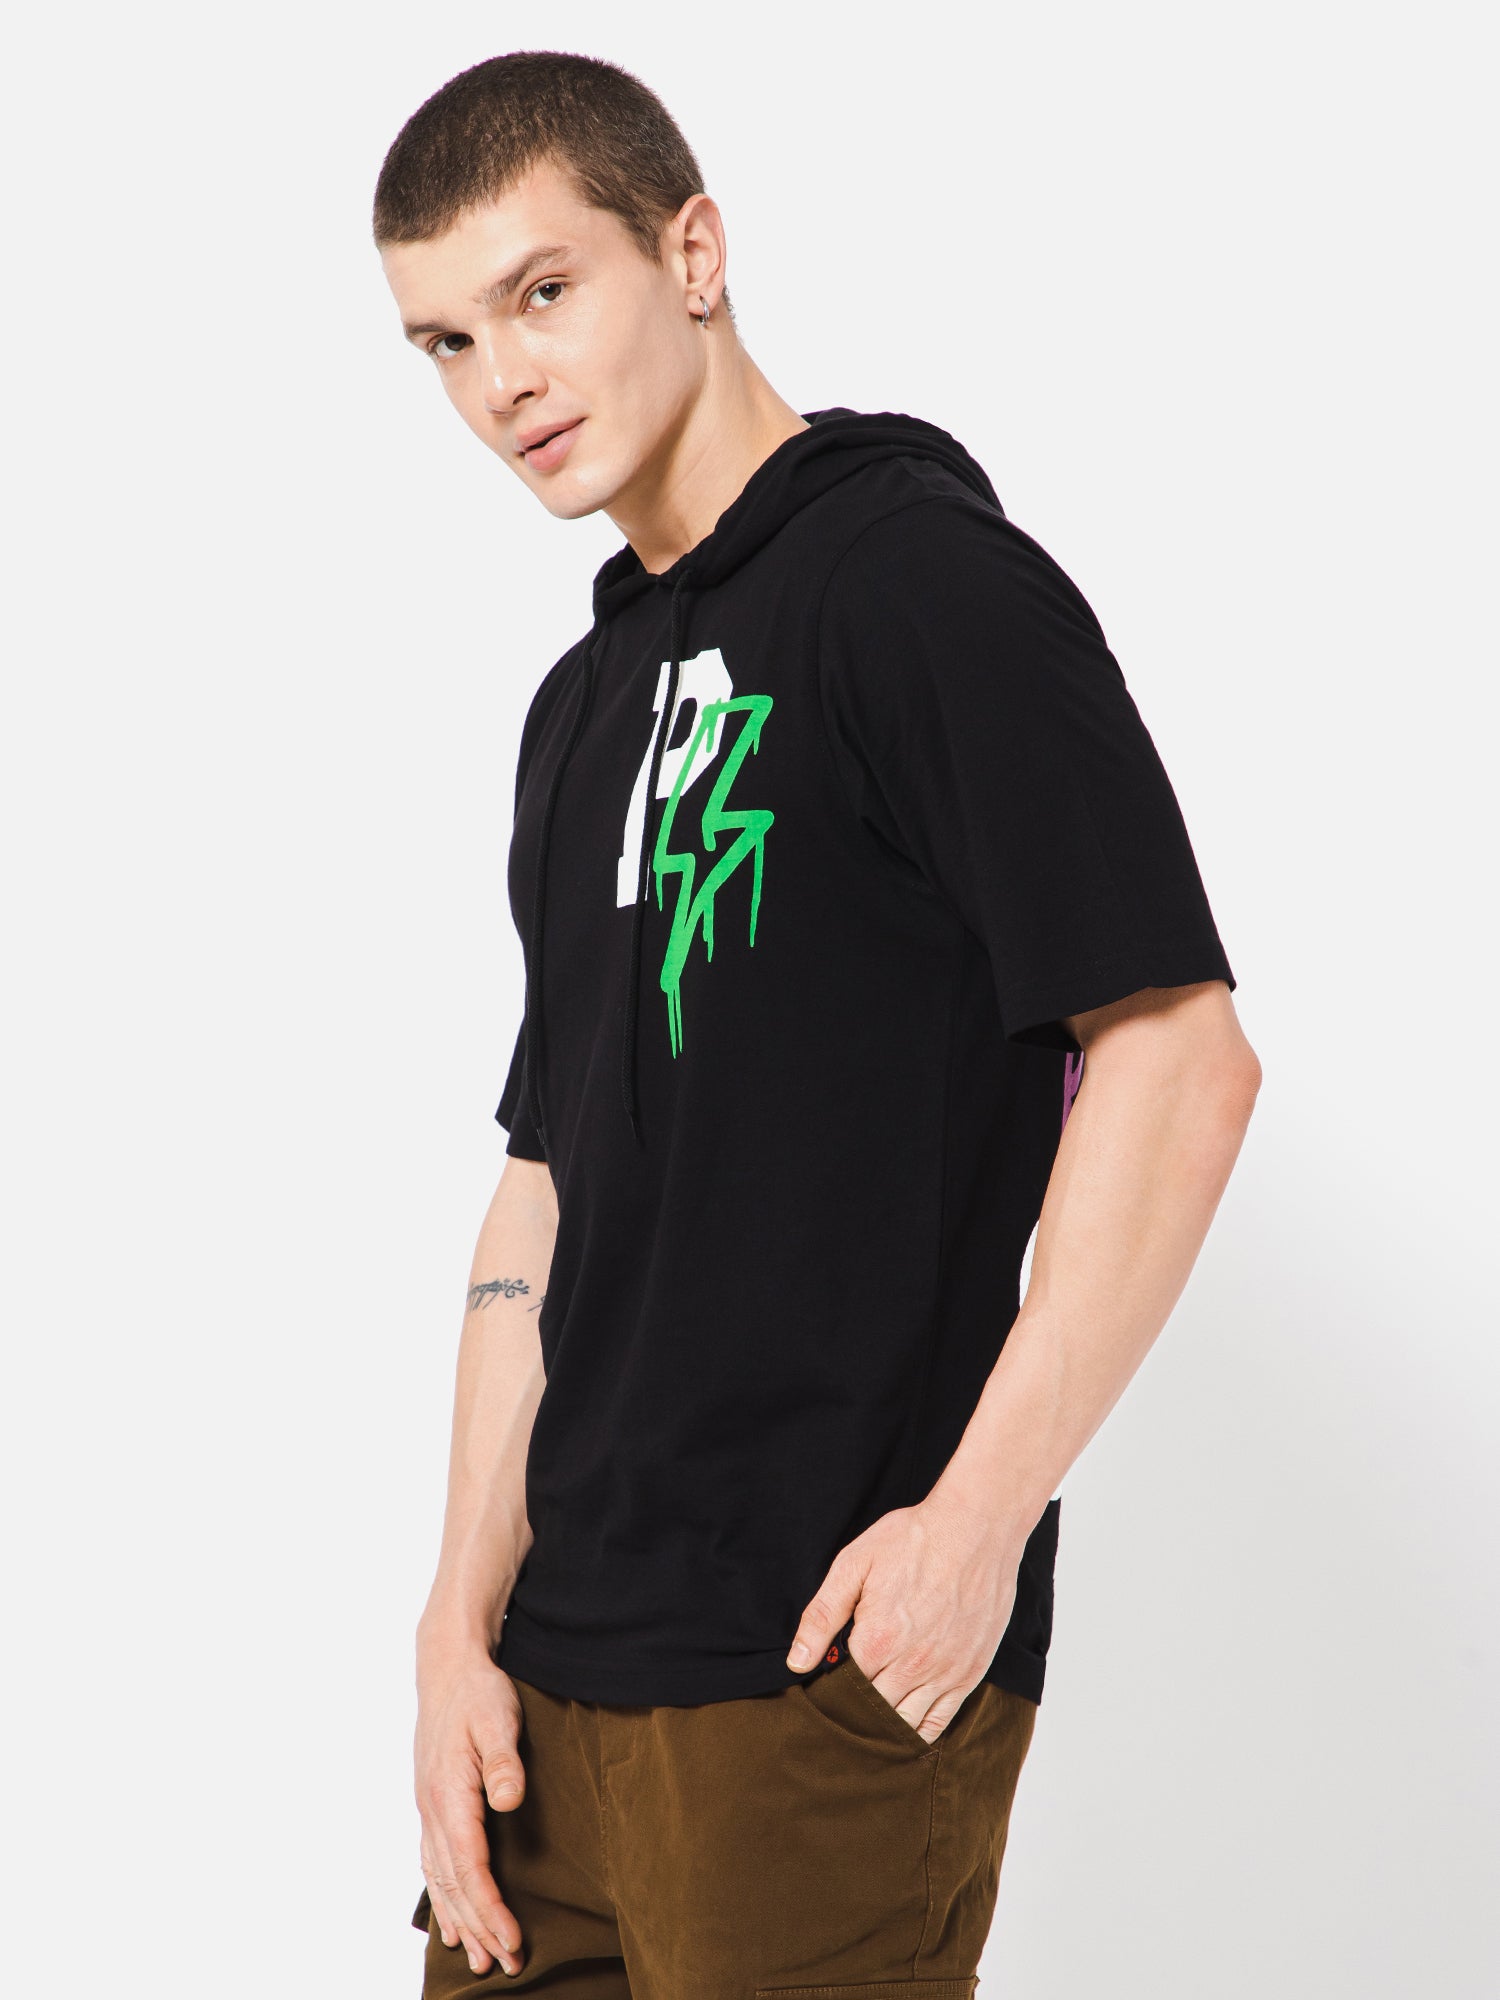 Punk LEGENDARY Black Oversized Printed Hoody T shirt